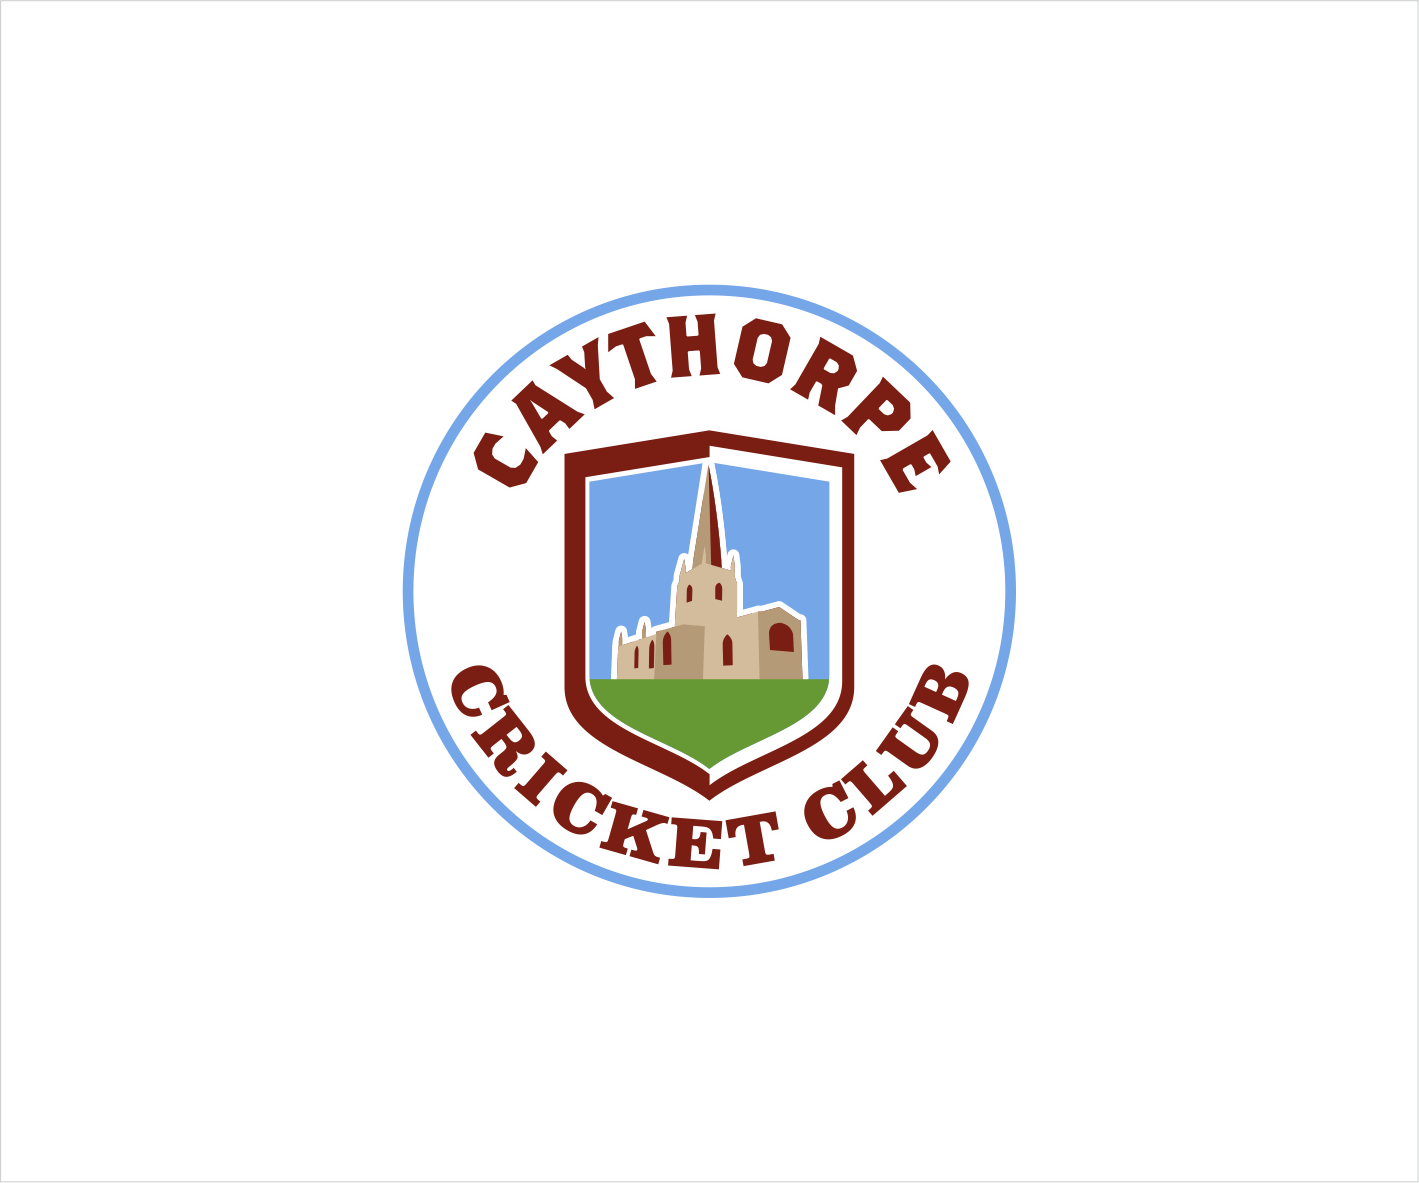 Crics Logo - Professional, Bold, Church Logo Design for Caythorpe Cricket Club by ...